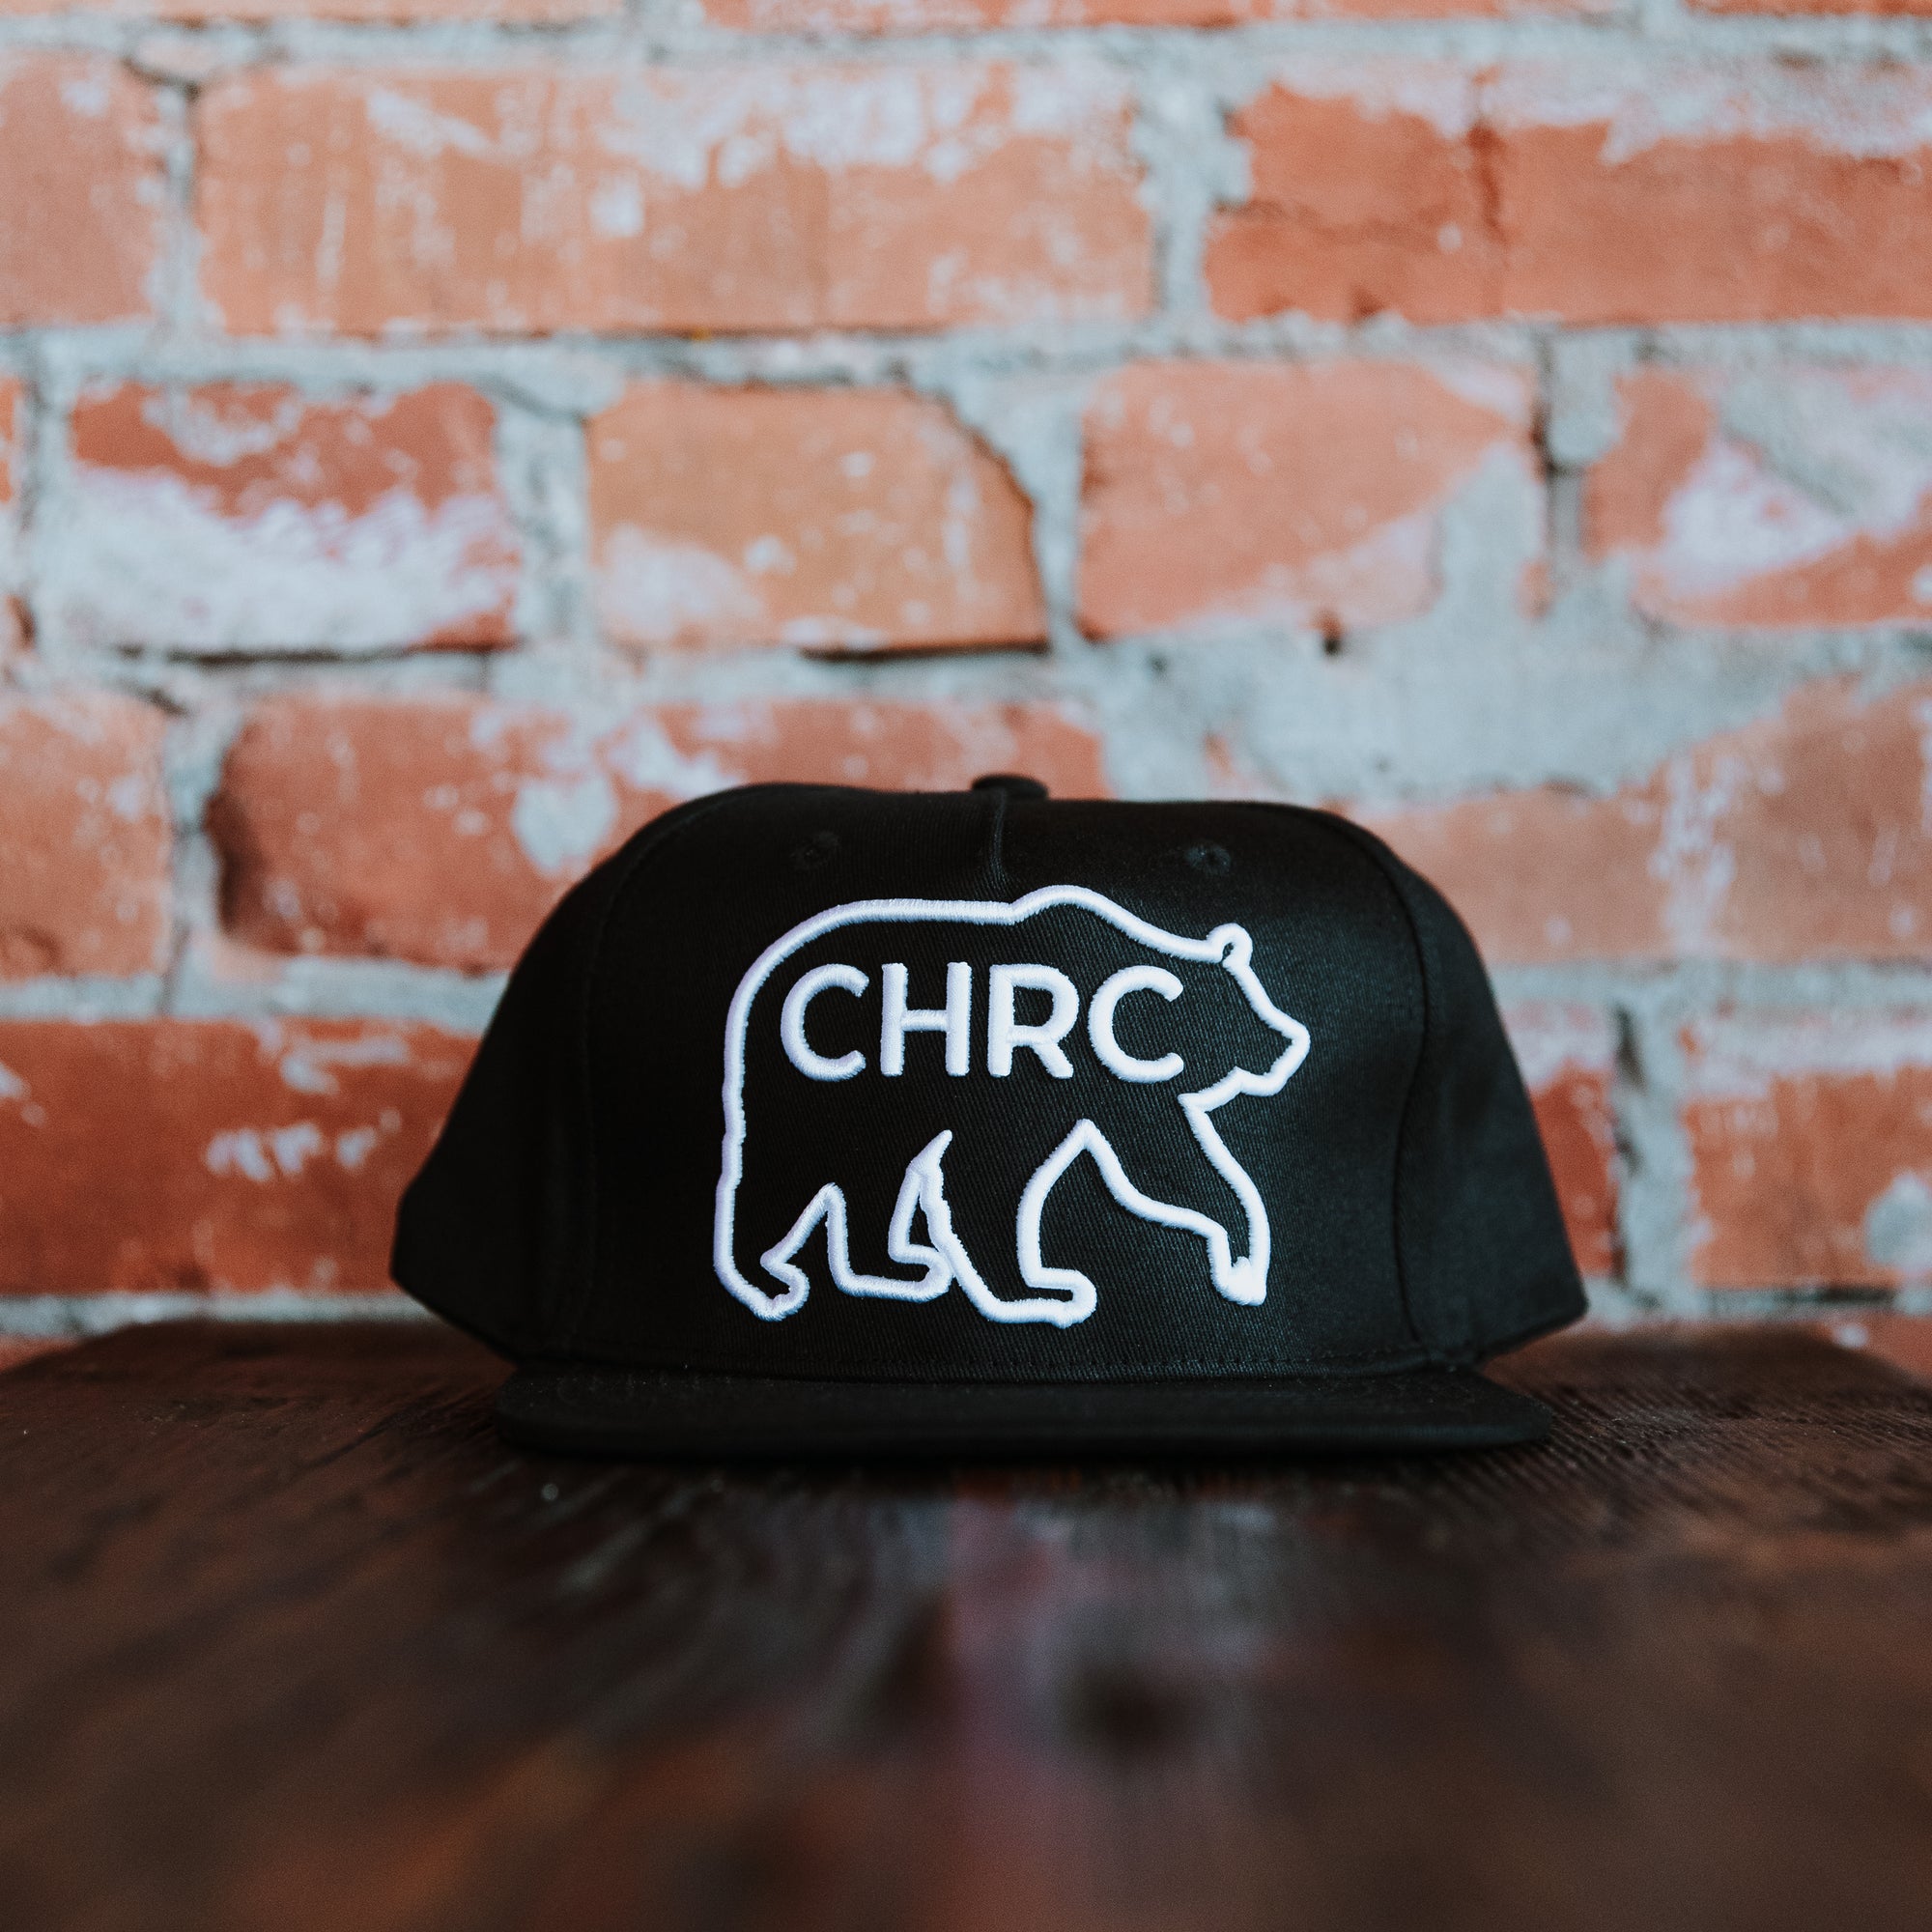 CHRC "Bubba" Bear Snapback